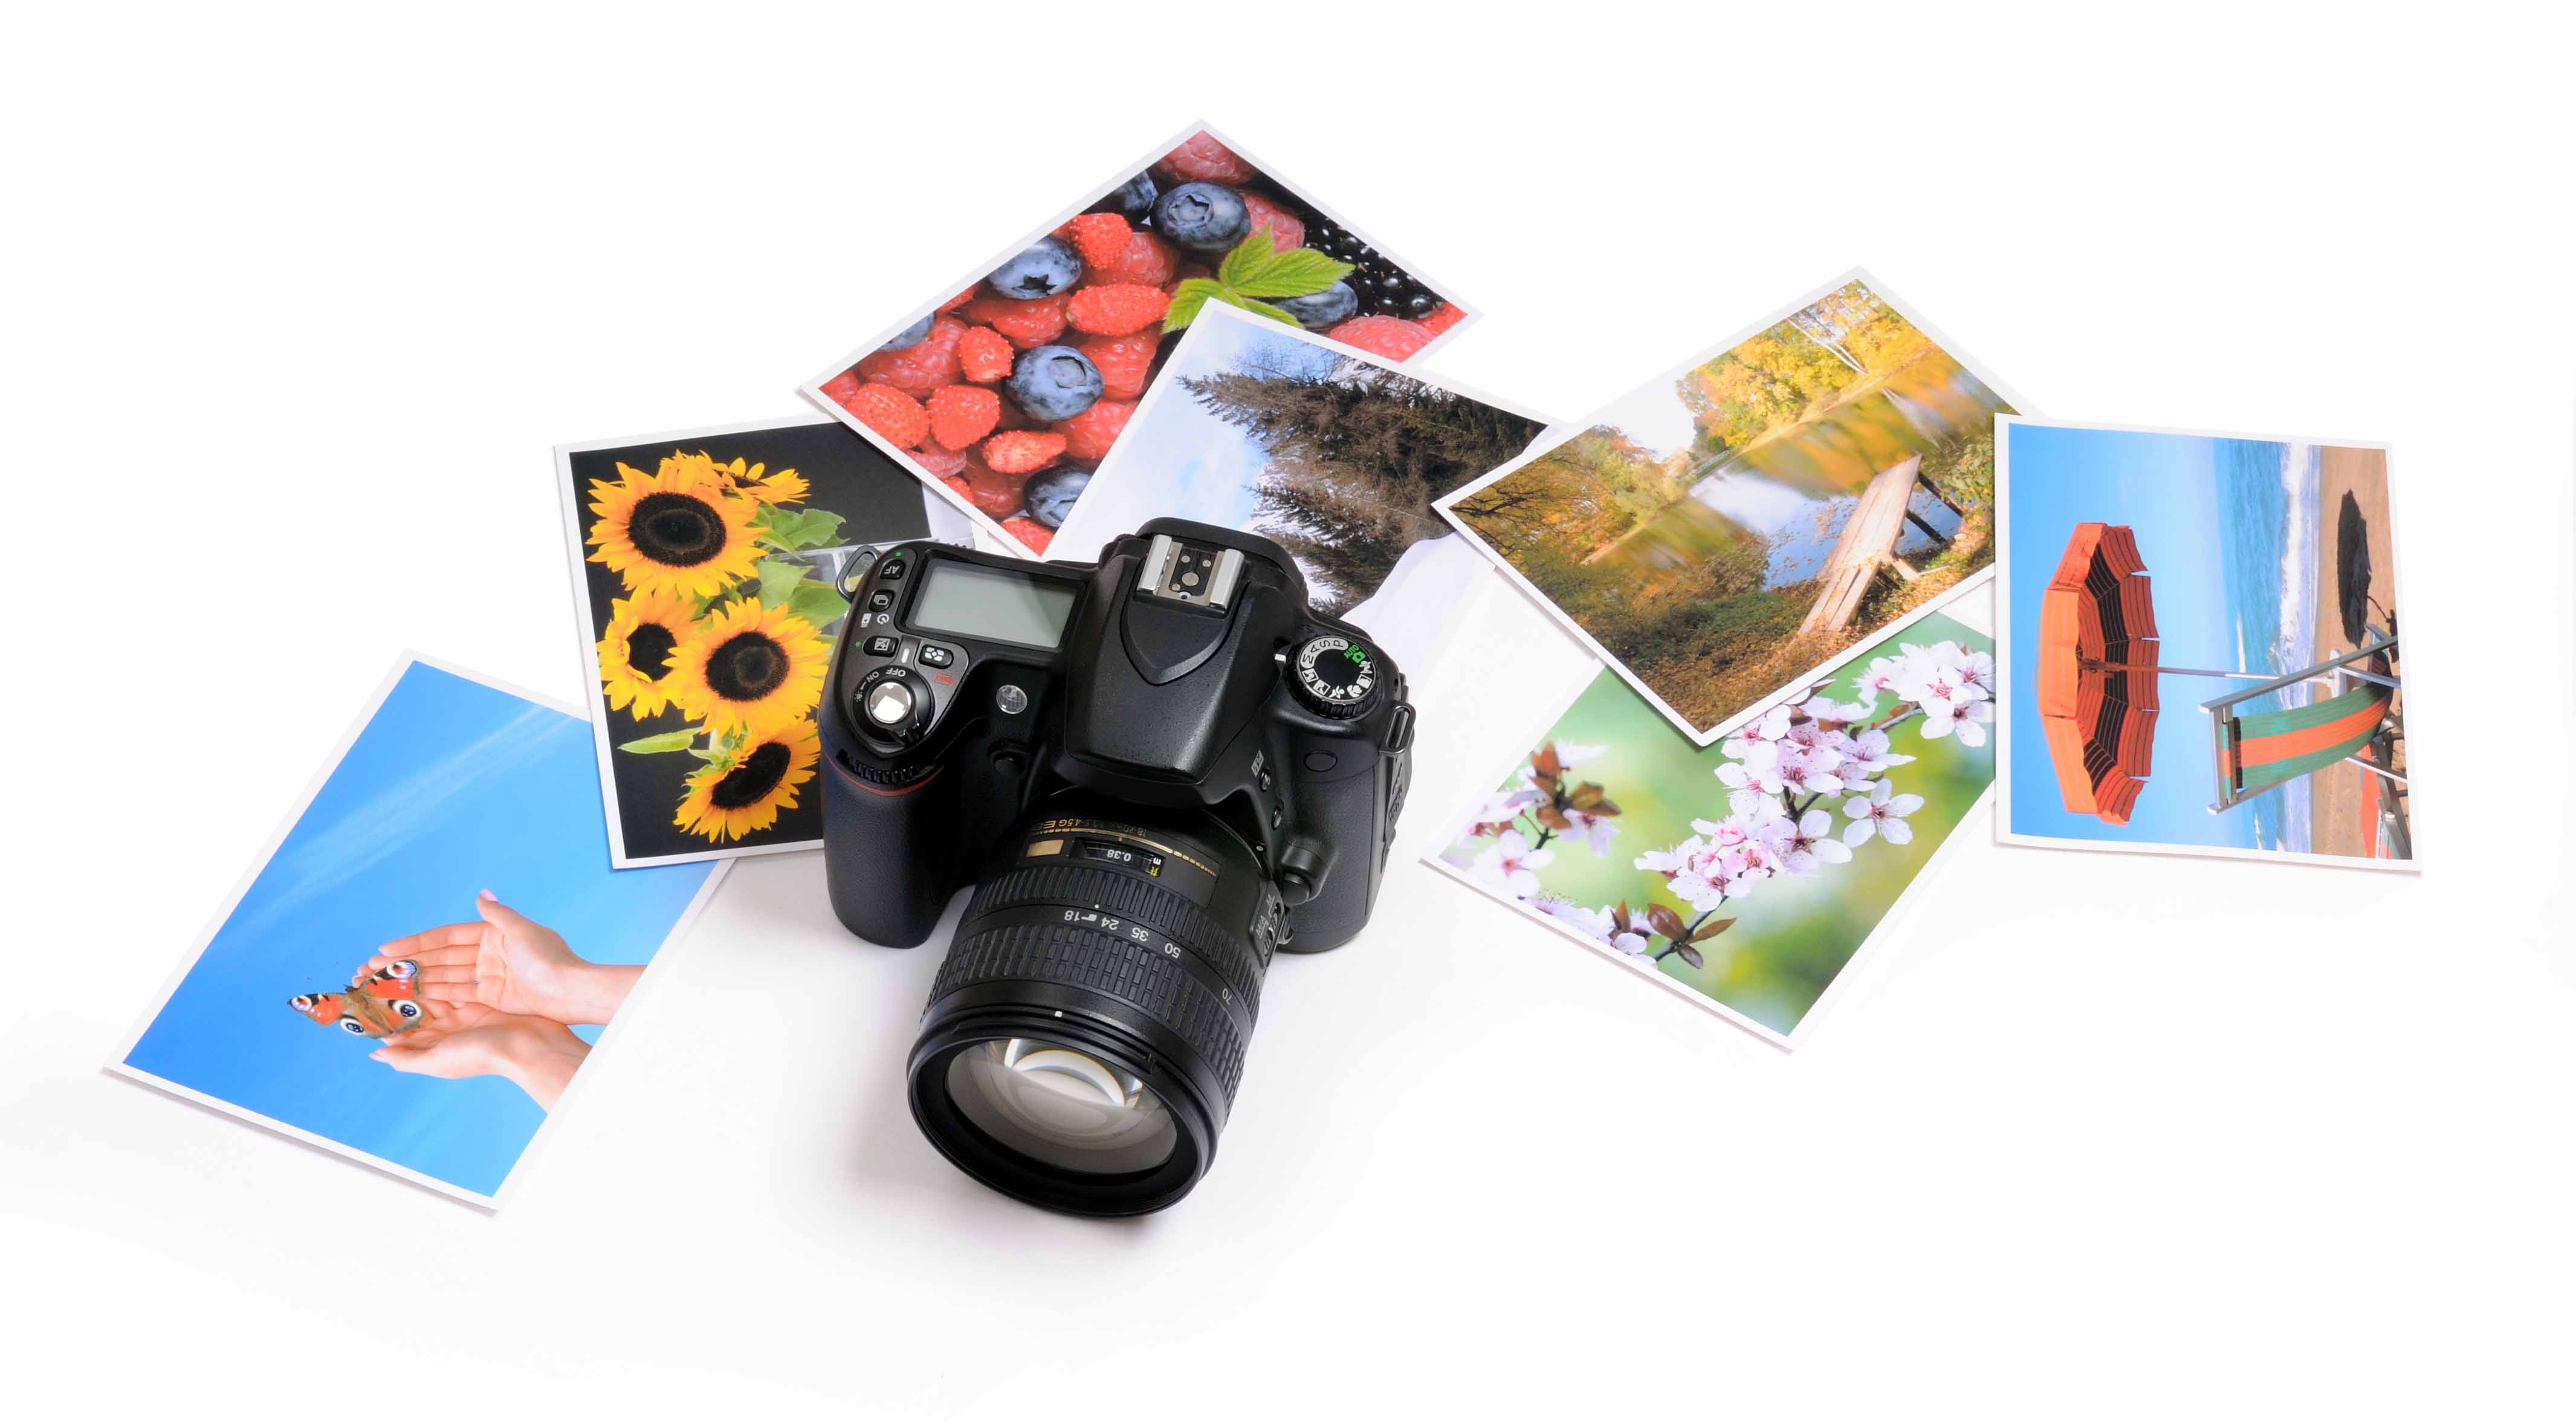 PhotoMe Create your PhotoBook Album